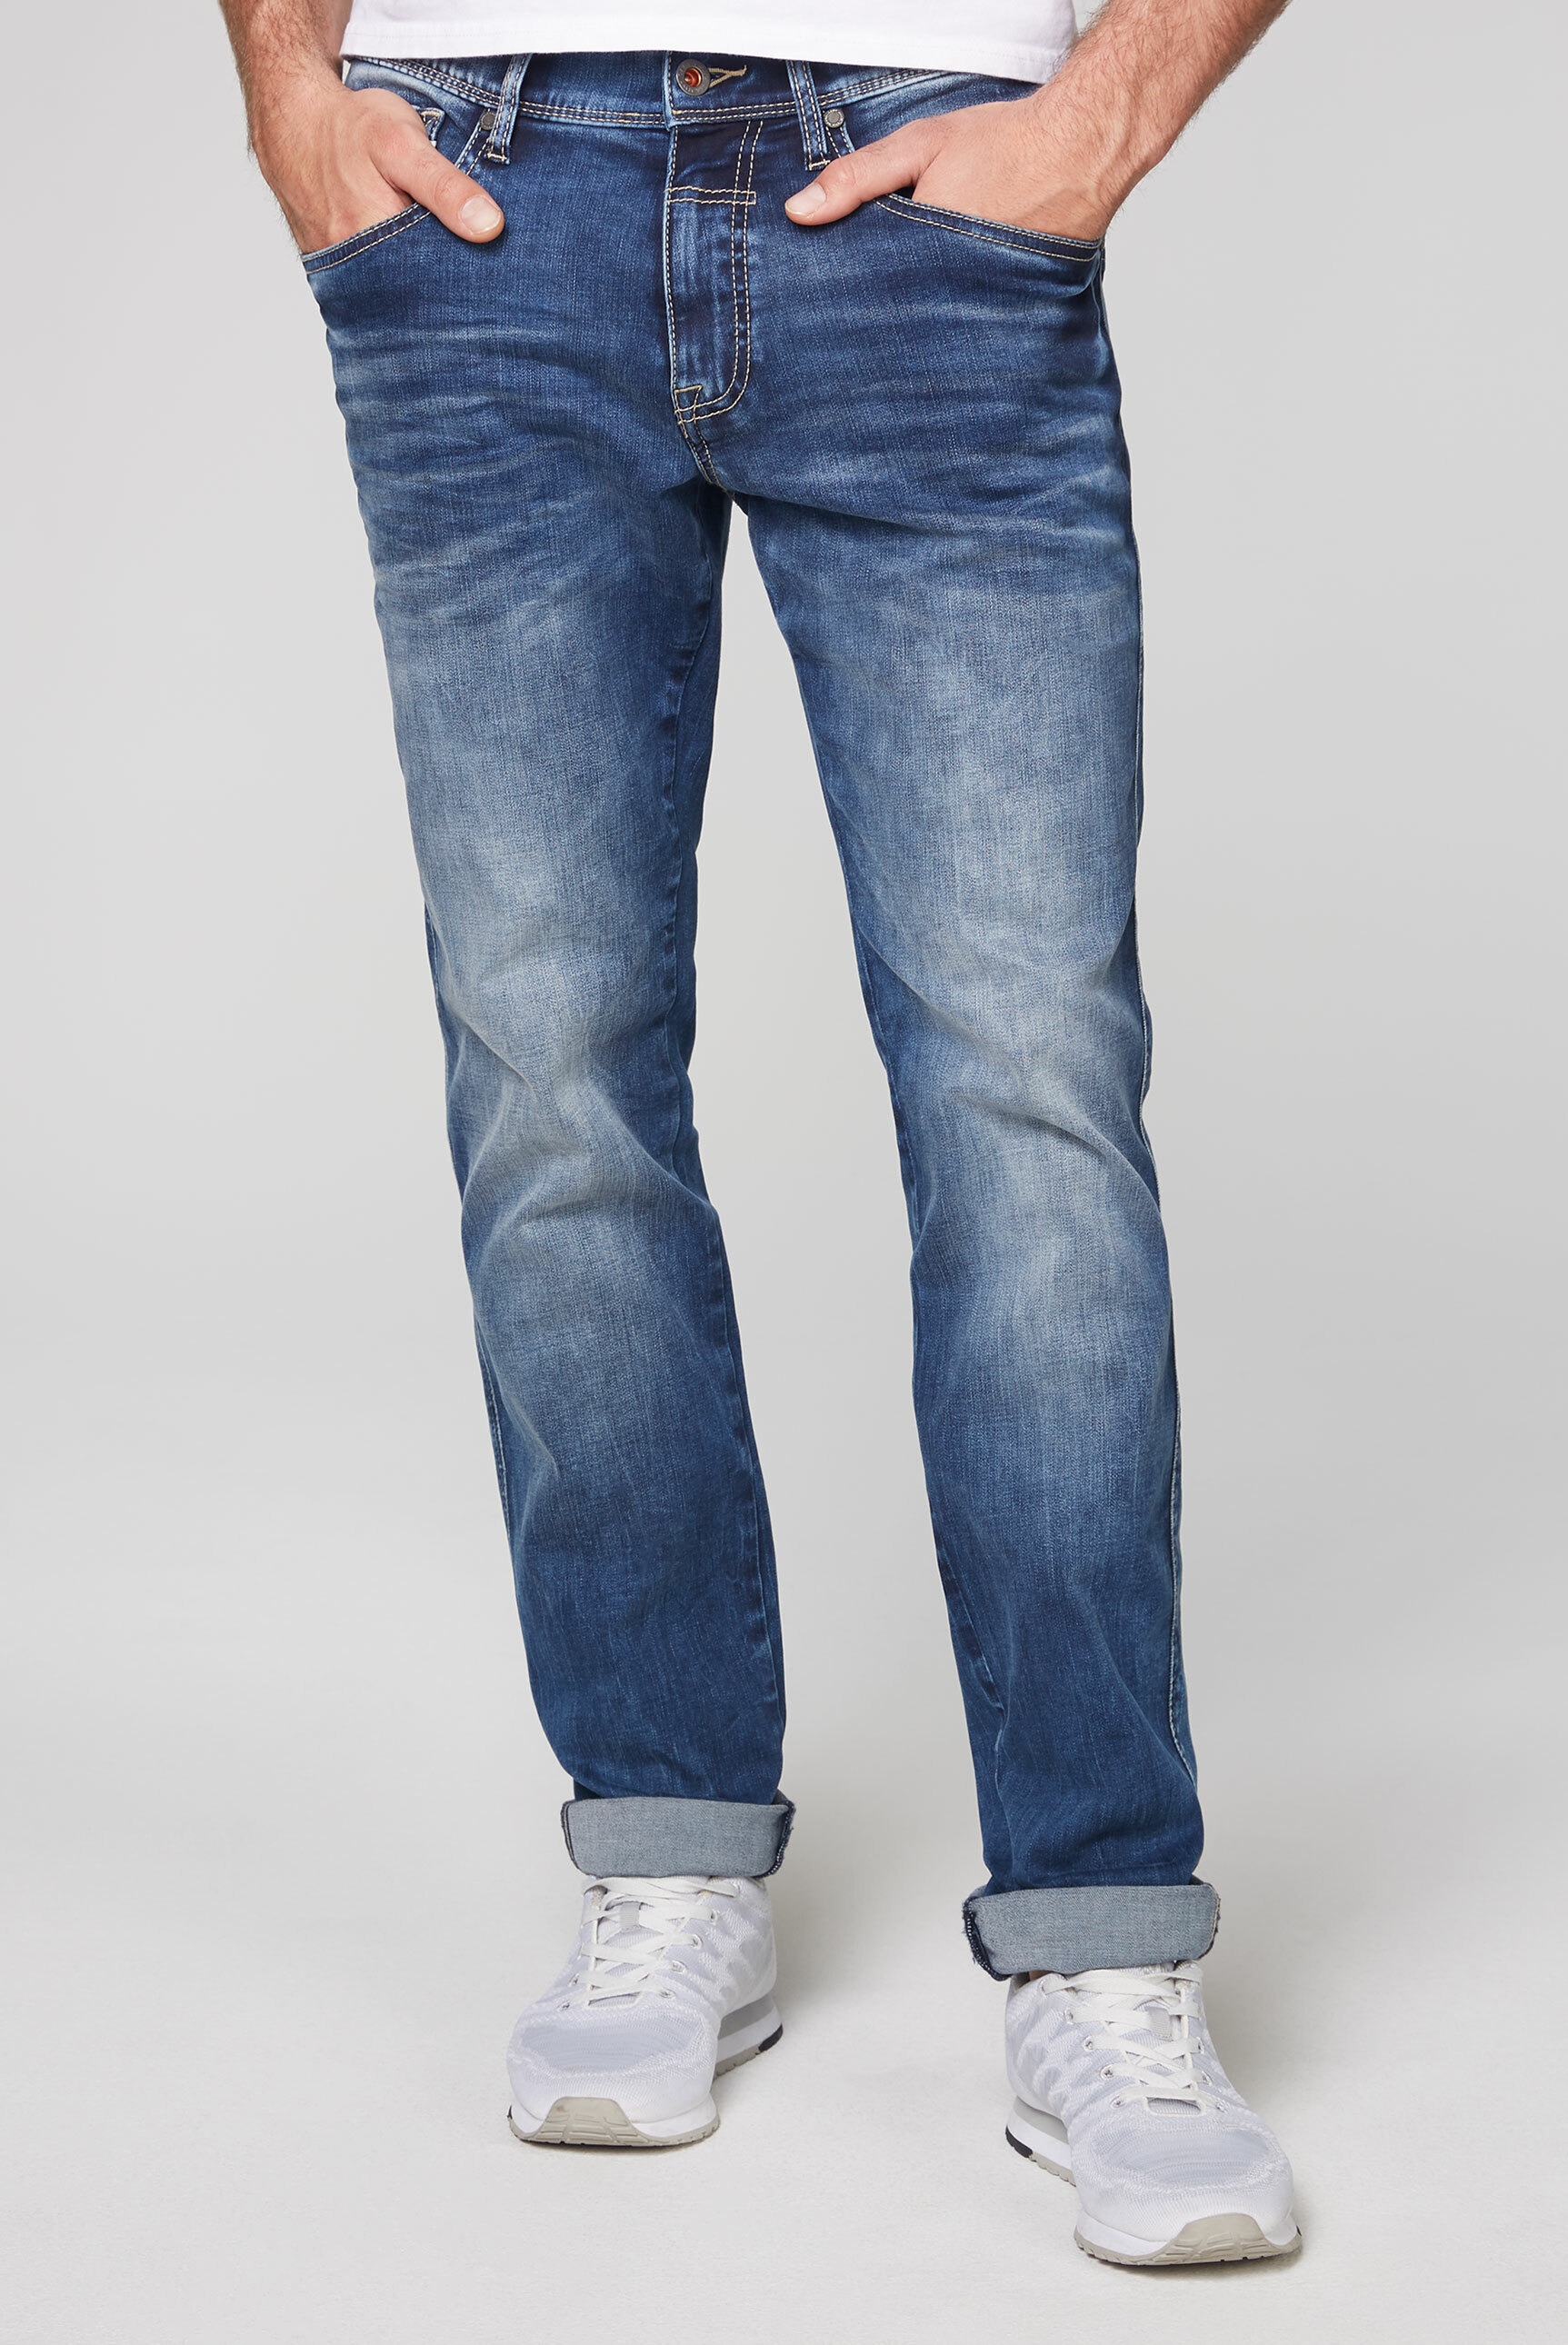 CAMP DAVID Regular-fit-Jeans, mit Stretch-Anteil